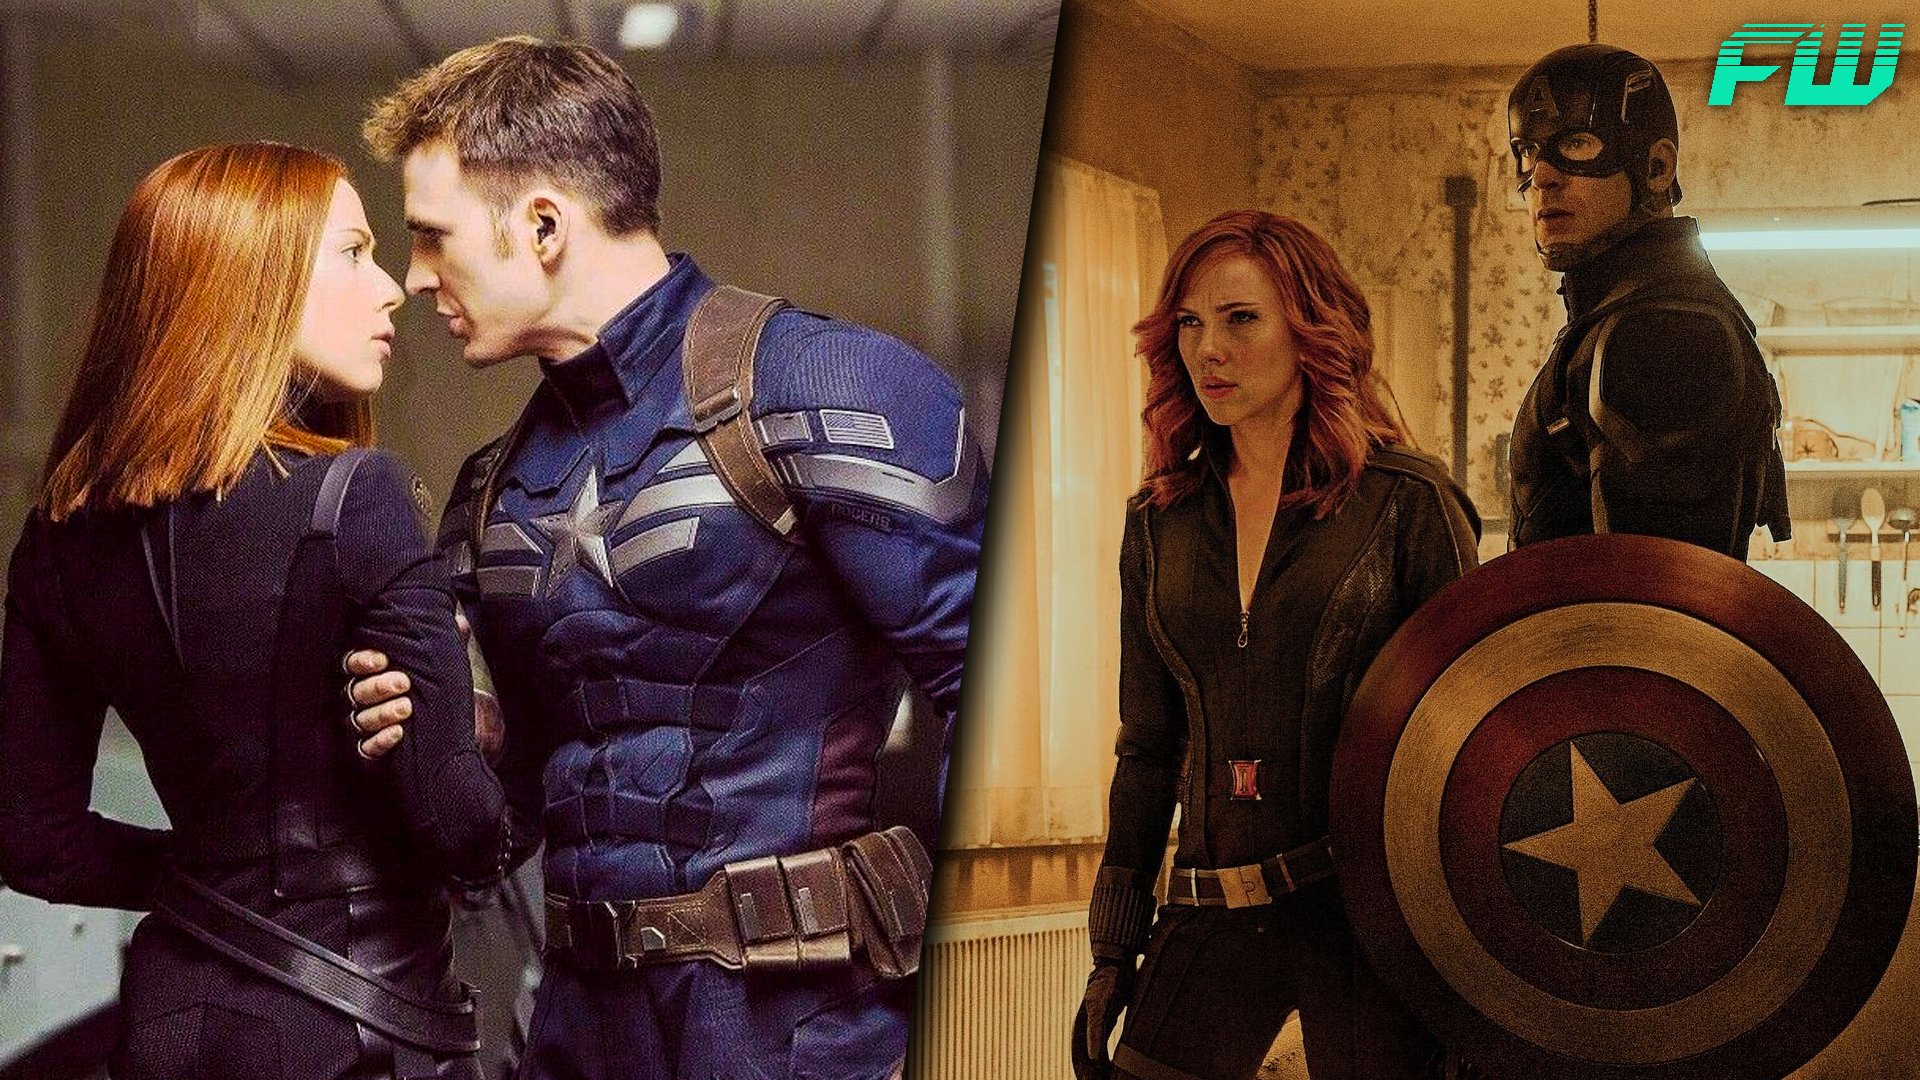 Did Captain America love Natasha?